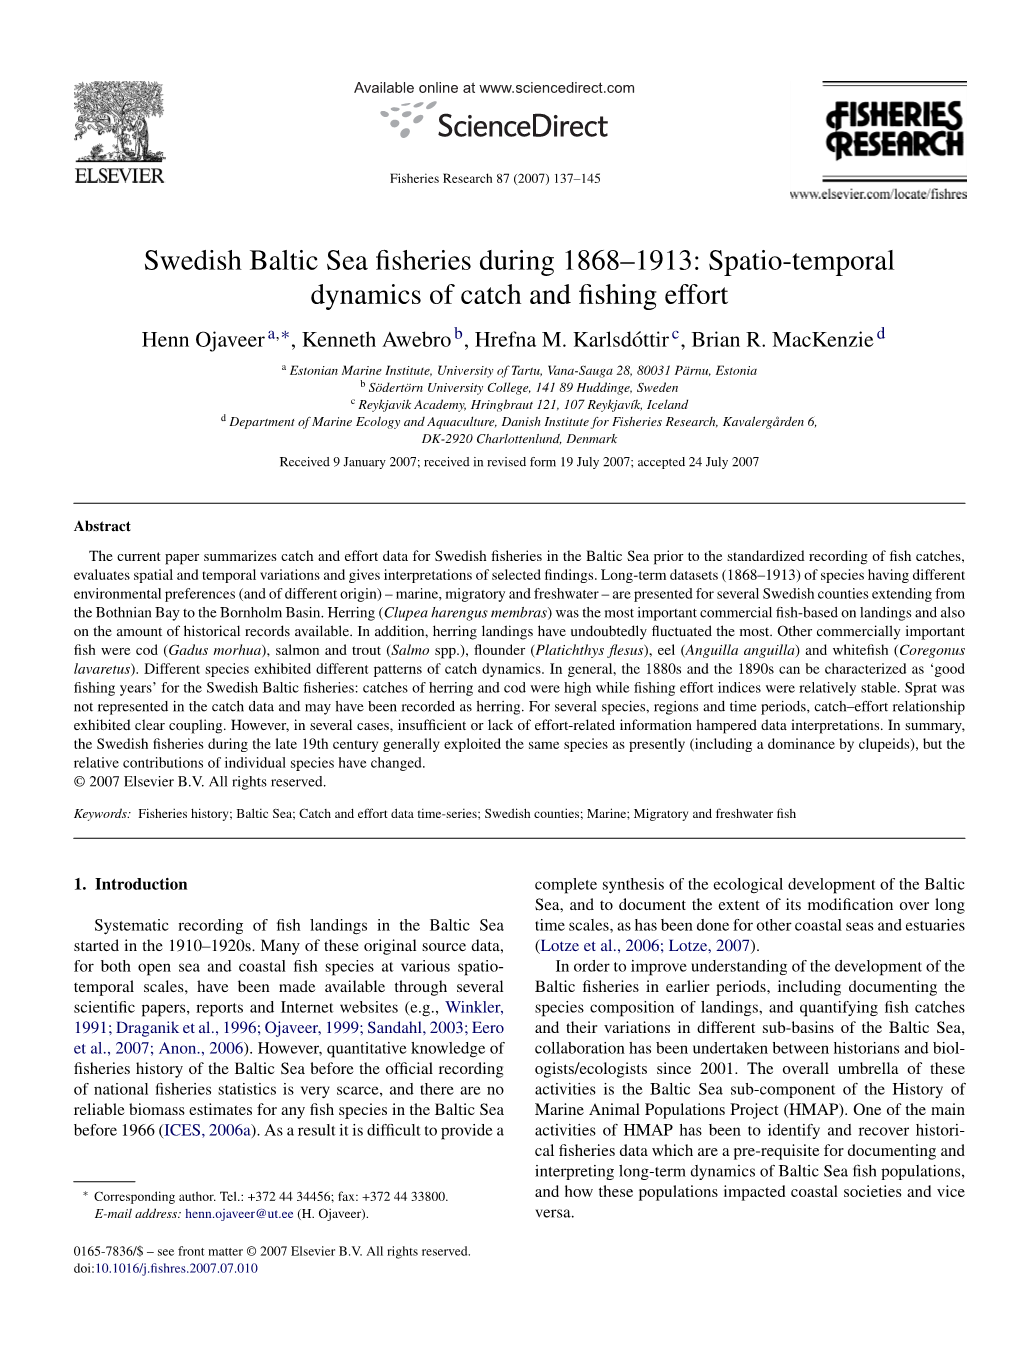 Swedish Baltic Sea Fisheries During 1868–1913